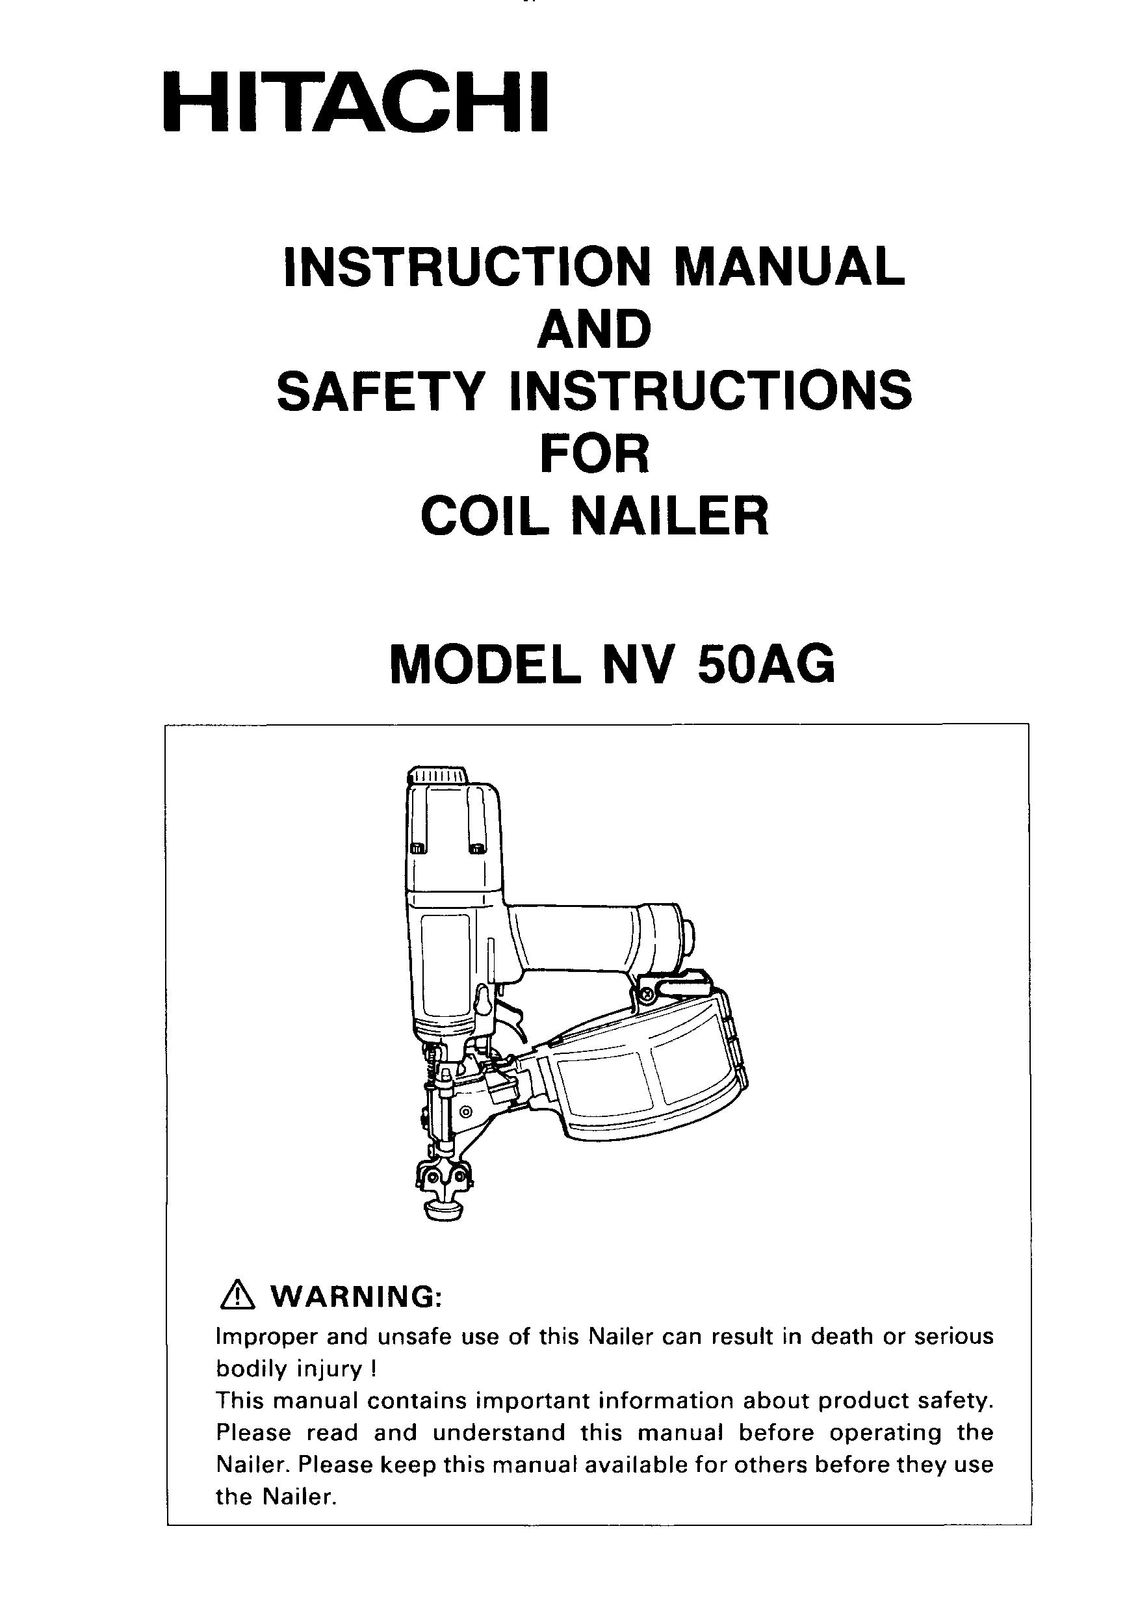 Hitachi Model NV 50AG Nail Gun User Manual